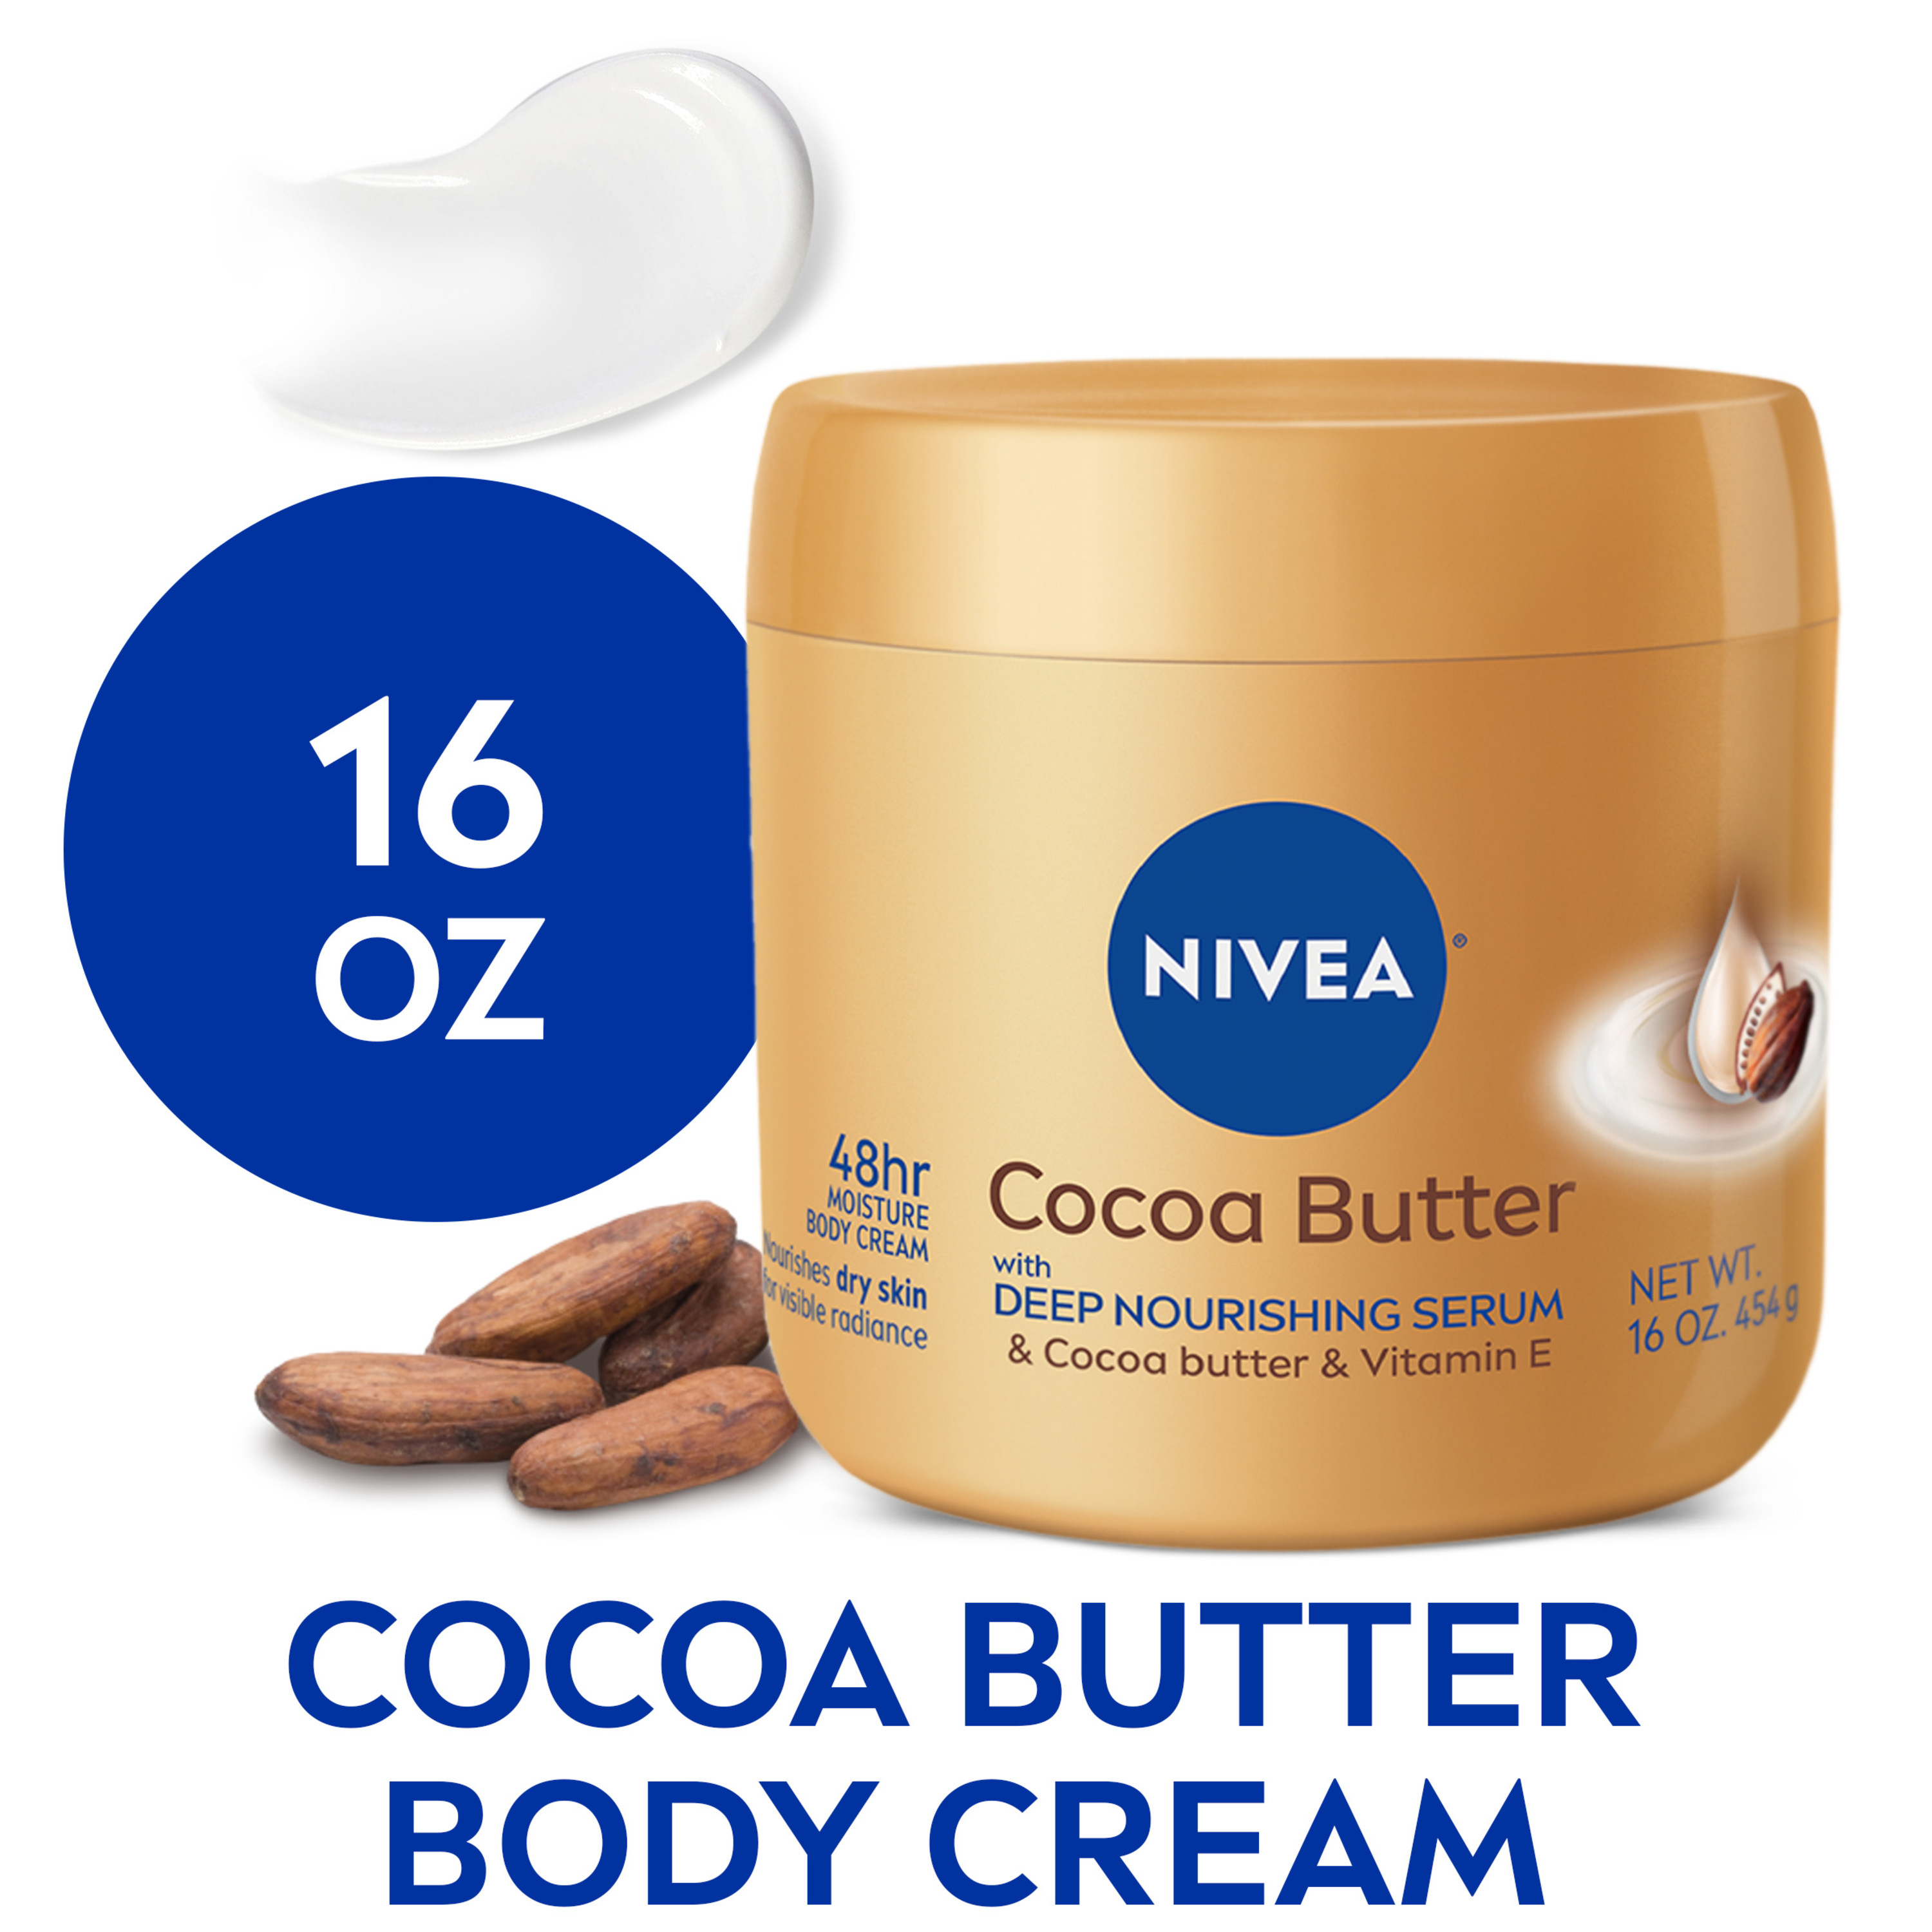 NIVEA Cocoa Butter Body Cream with Deep Nourishing Serum, 16 Ounce - image 1 of 11